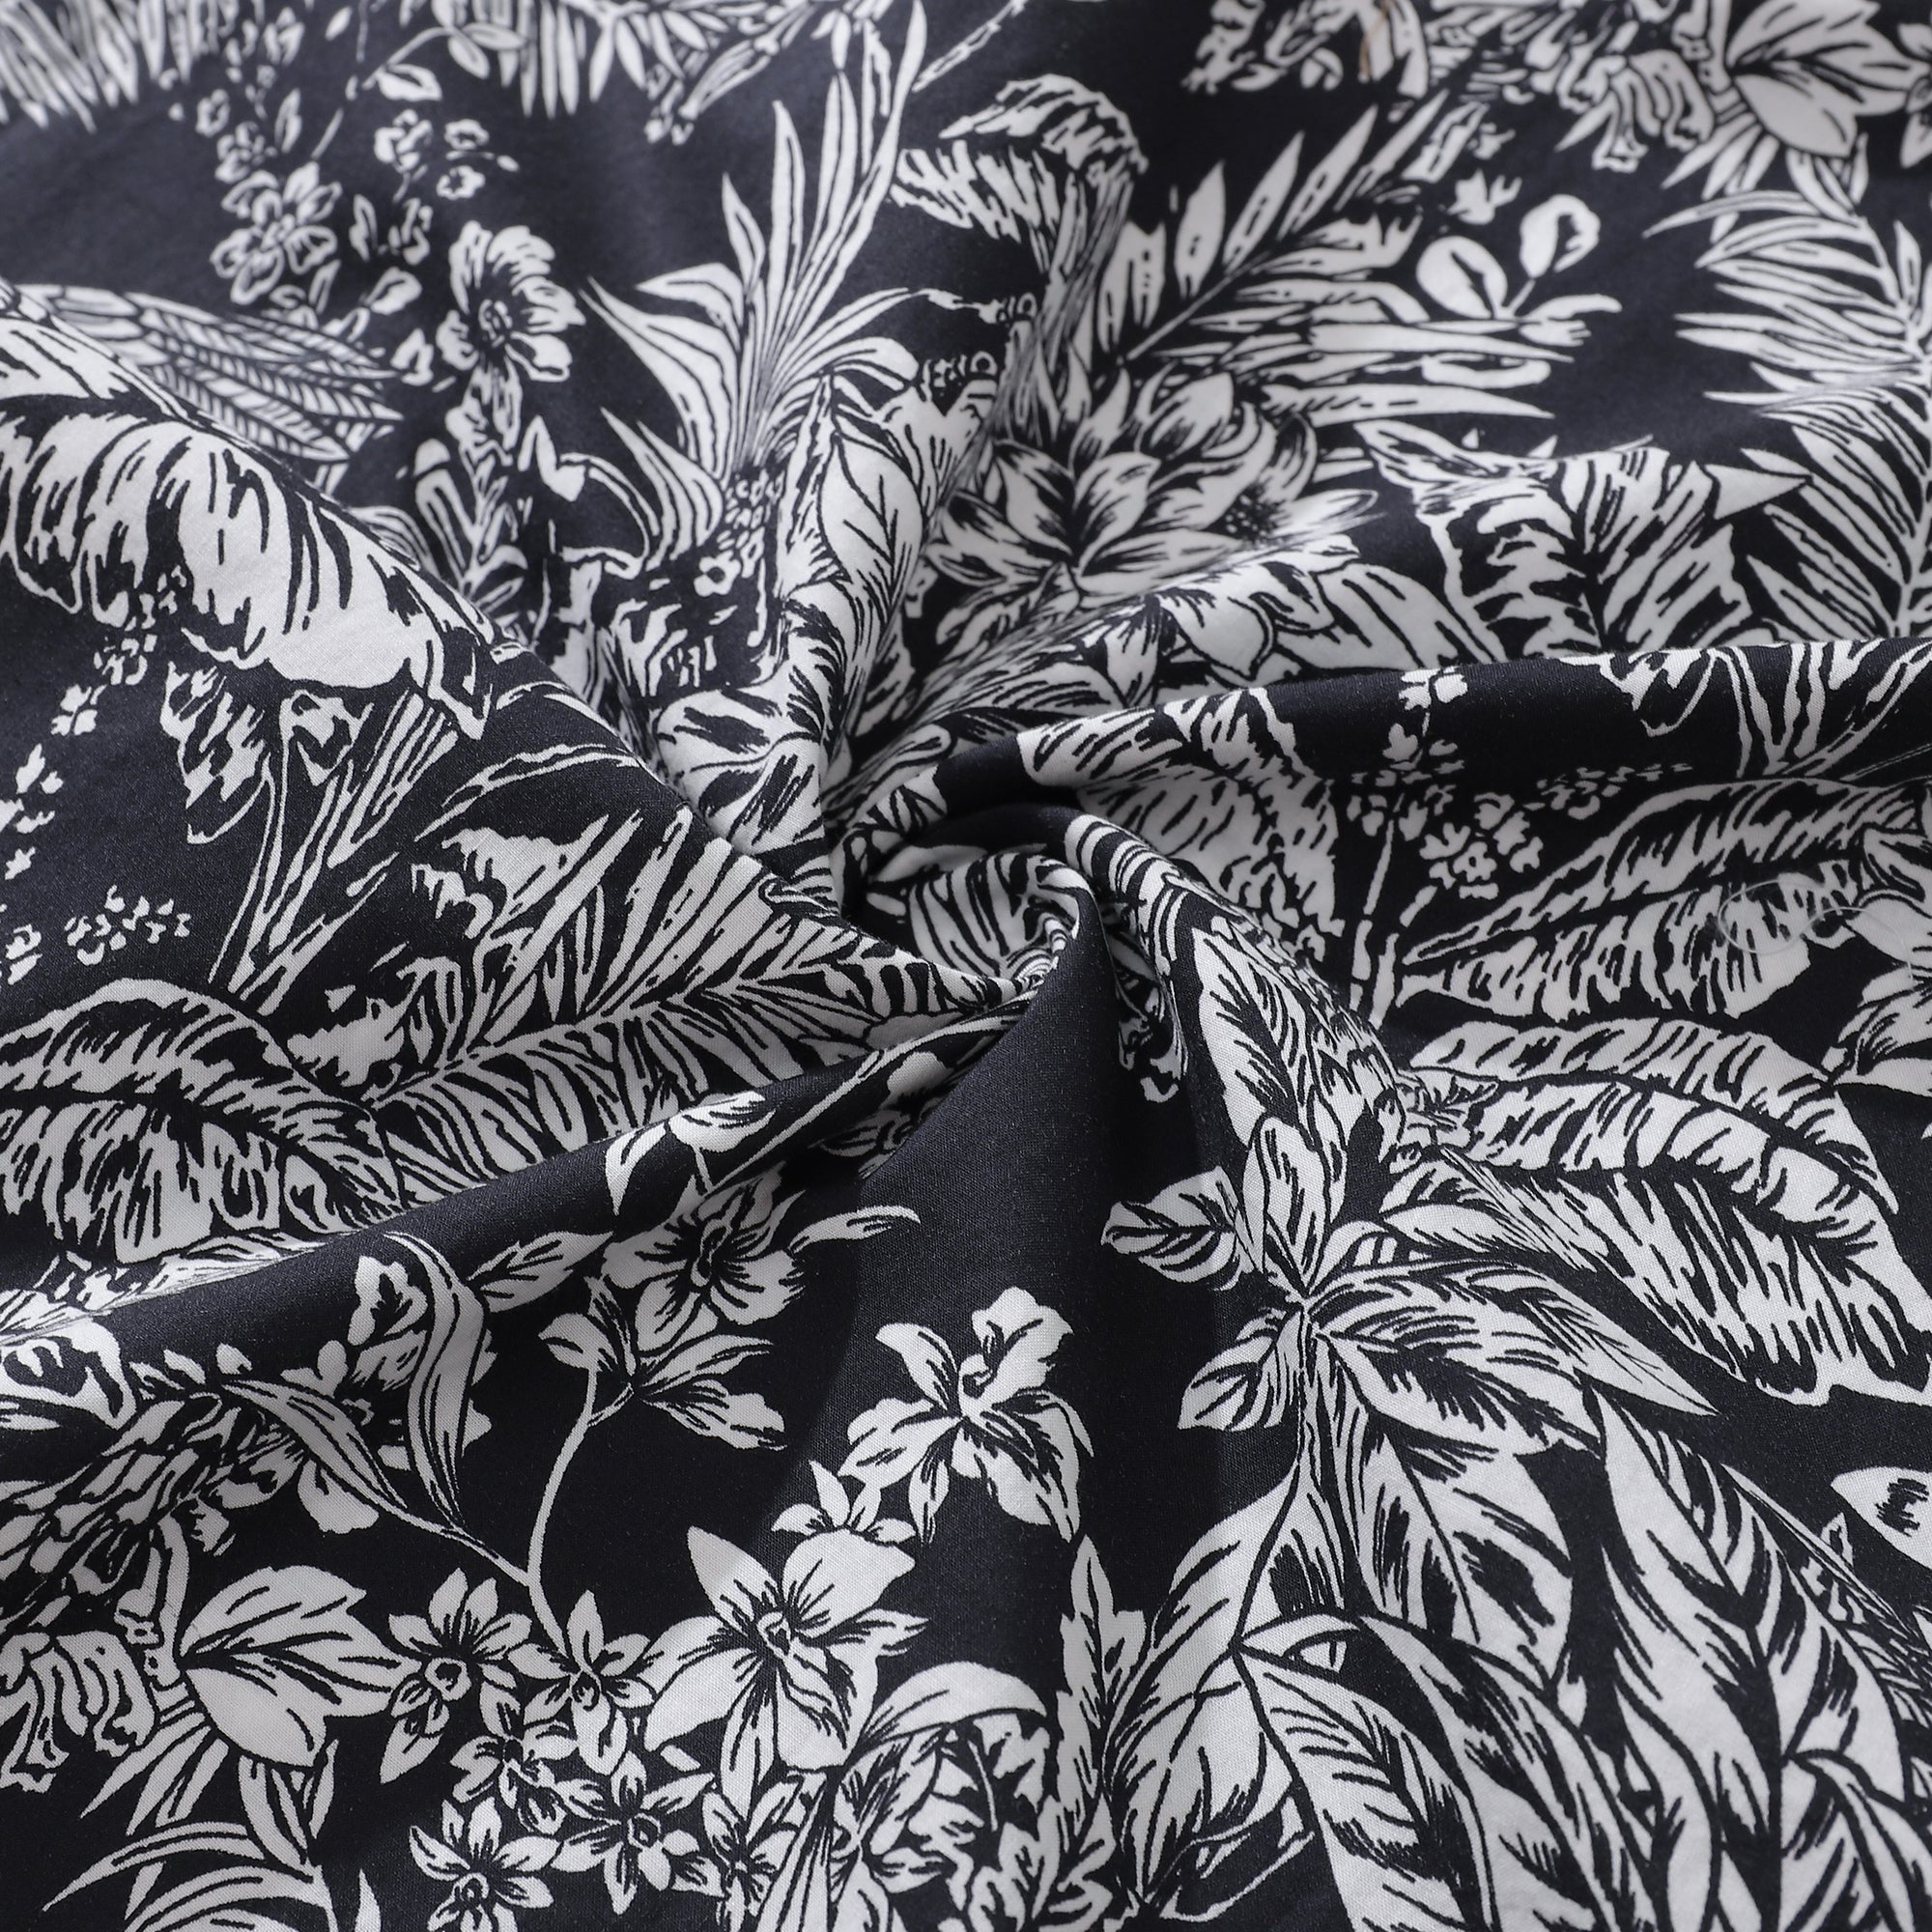 Men's Hawaiian Shirt Black Parrot In The Jungle 100% Cotton Button Down